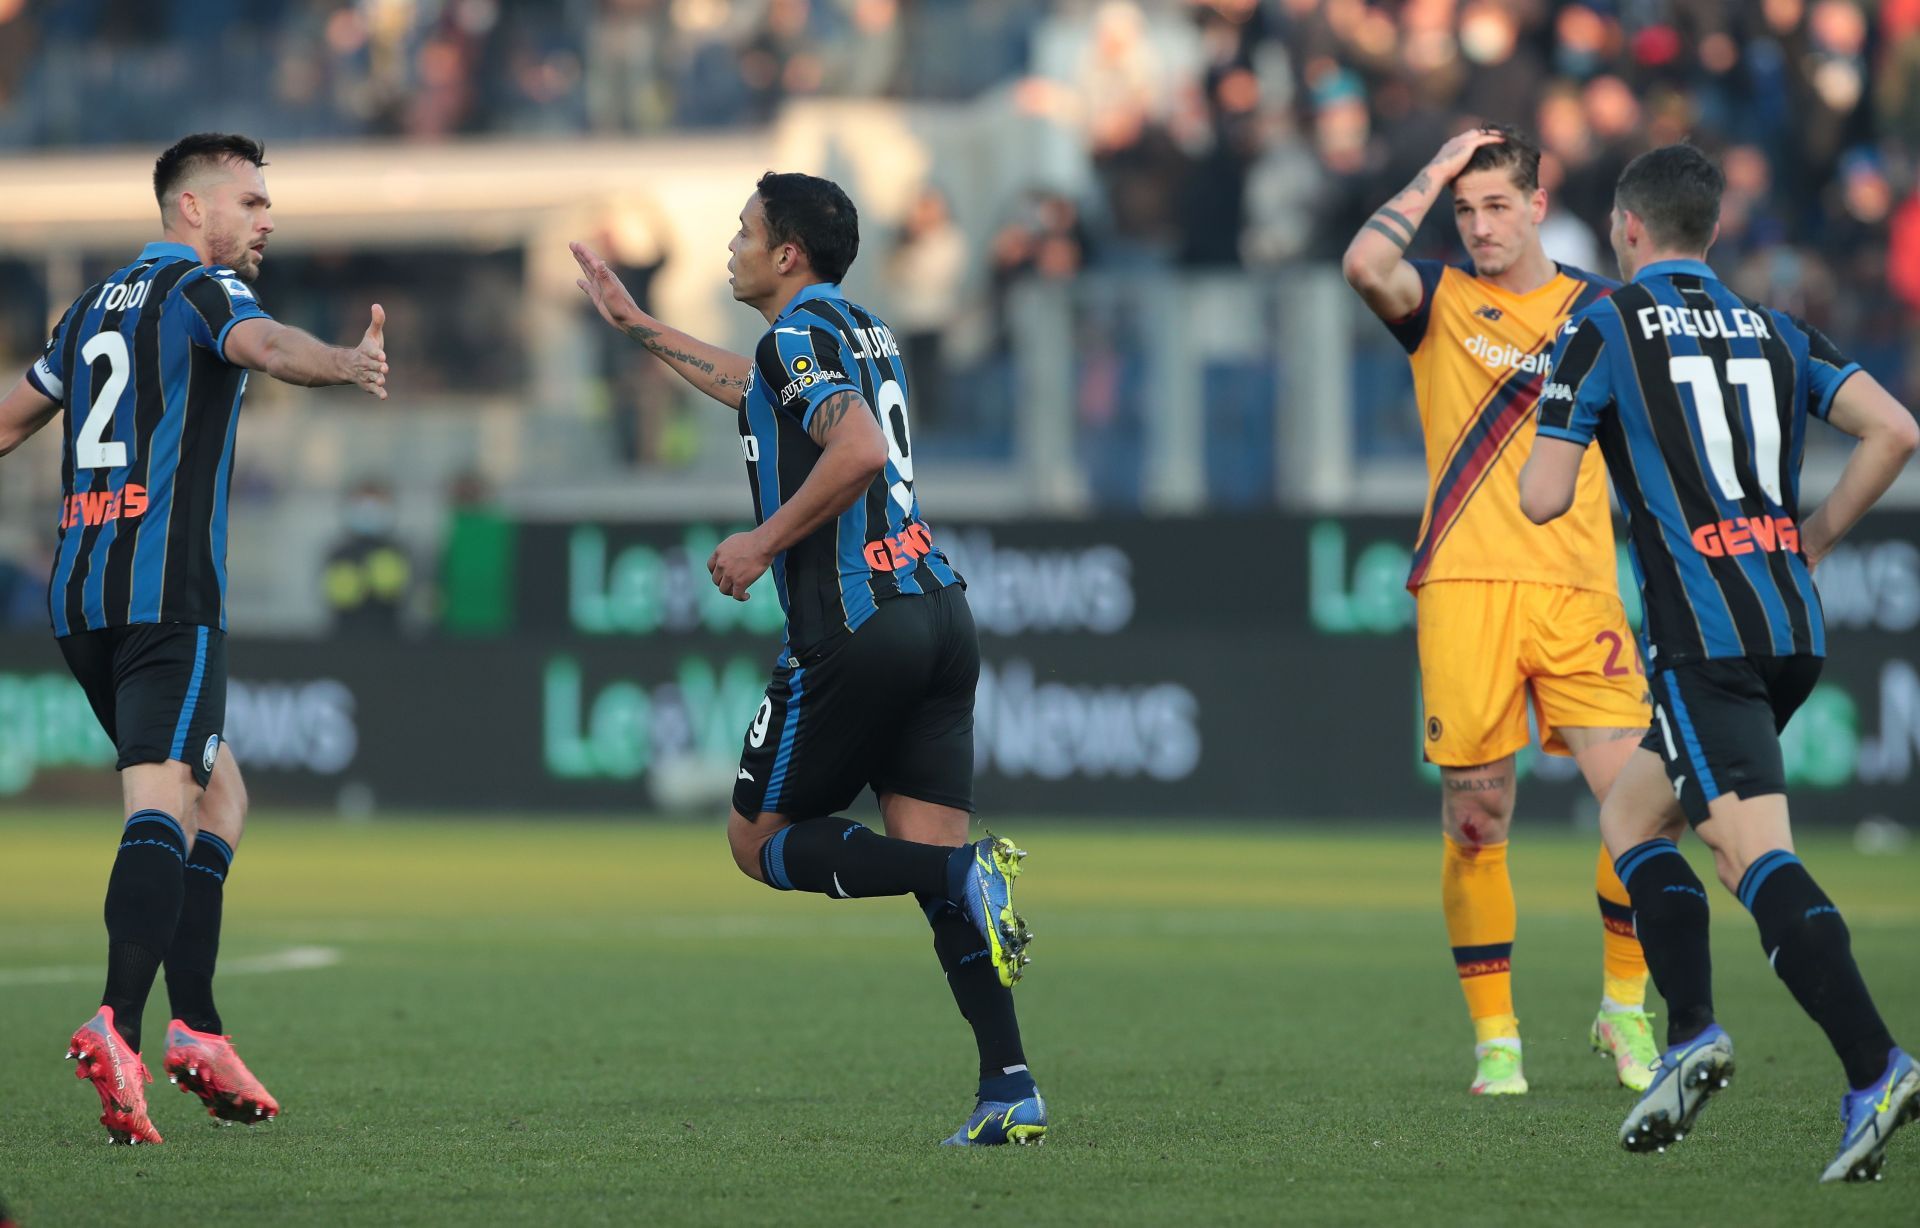 Atalanta resume their Coppa Italia campaign with their round of 16 clash against Venezia